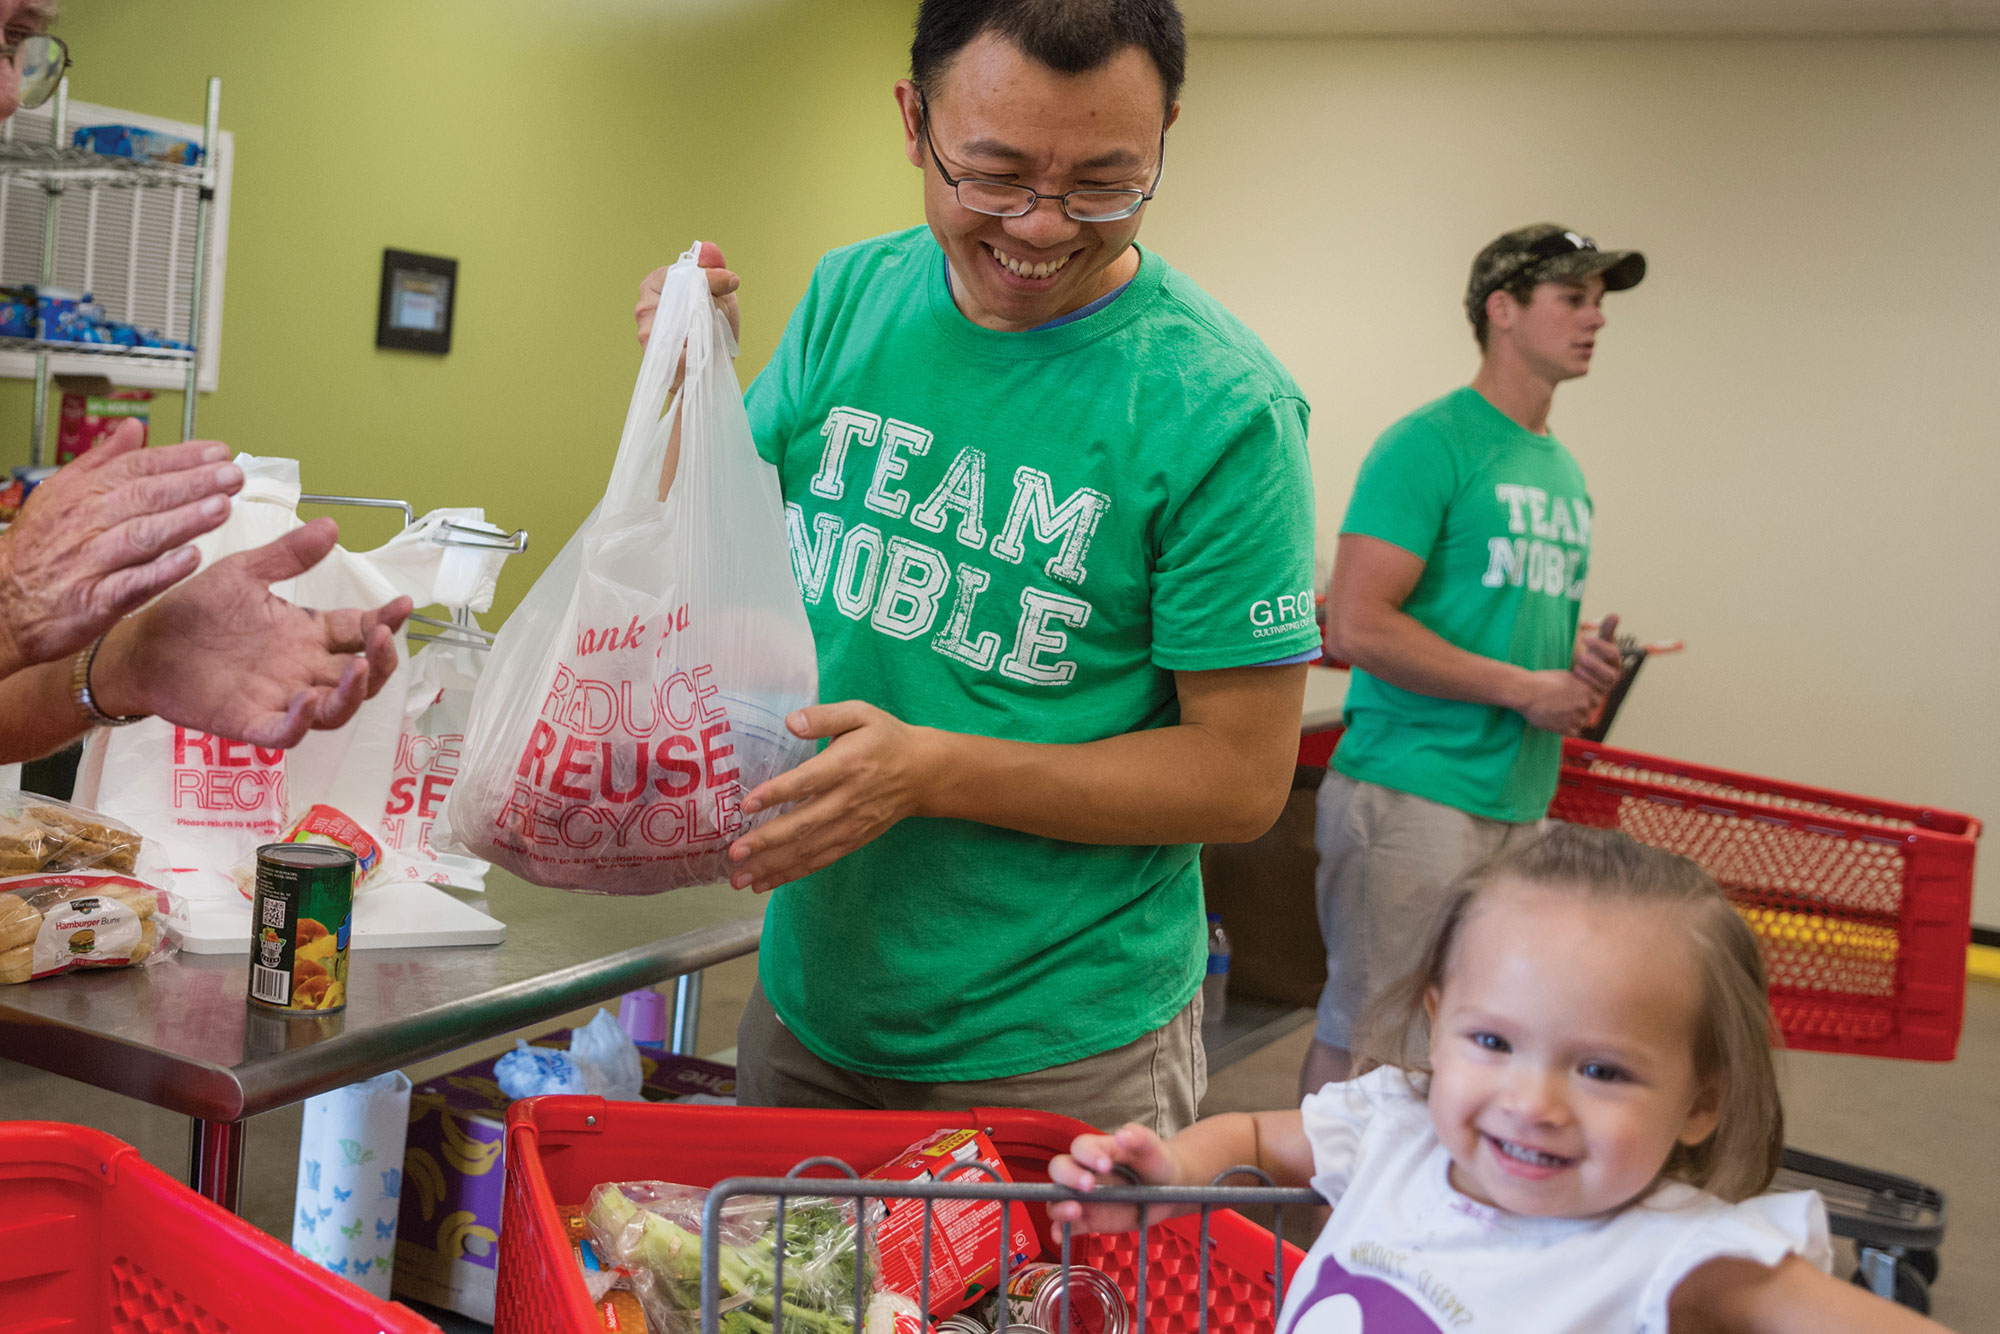 Maofeng Chai, Ph.D. and Landon Riggle help families shop and bag their food selections to take home.